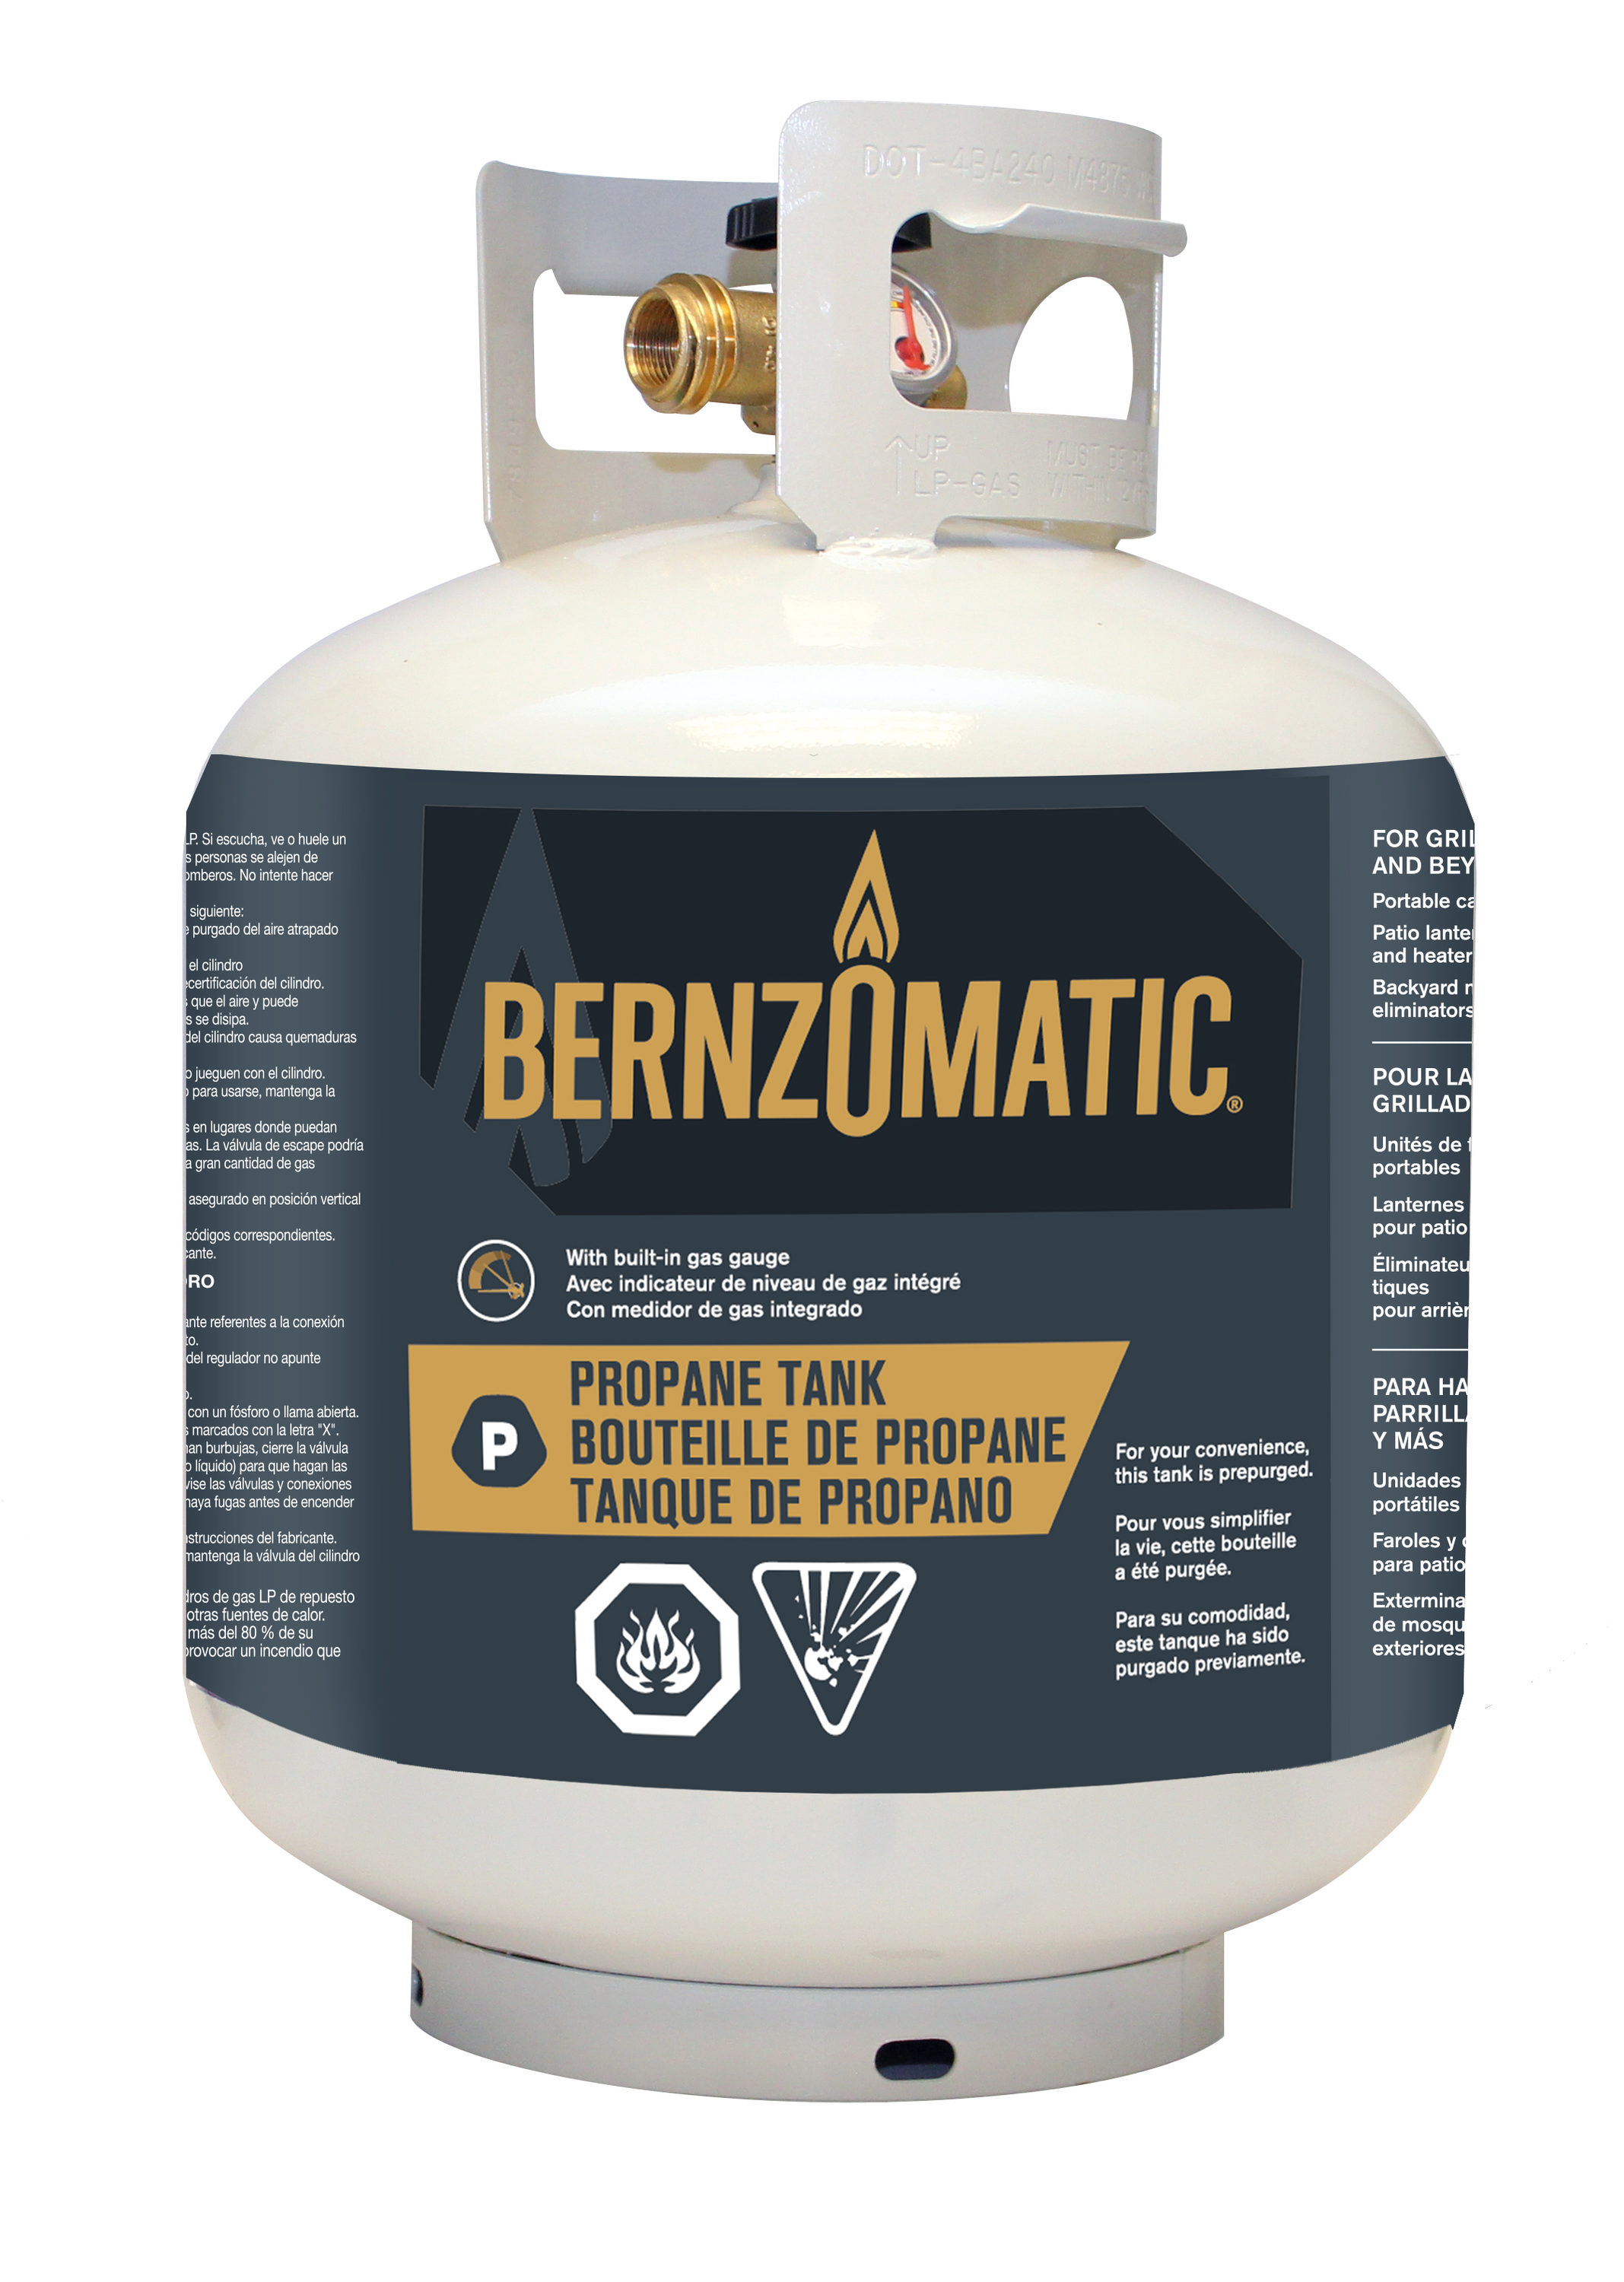 BernzOmatic Propane Gas Cylinders - 2 Pack - 1lb